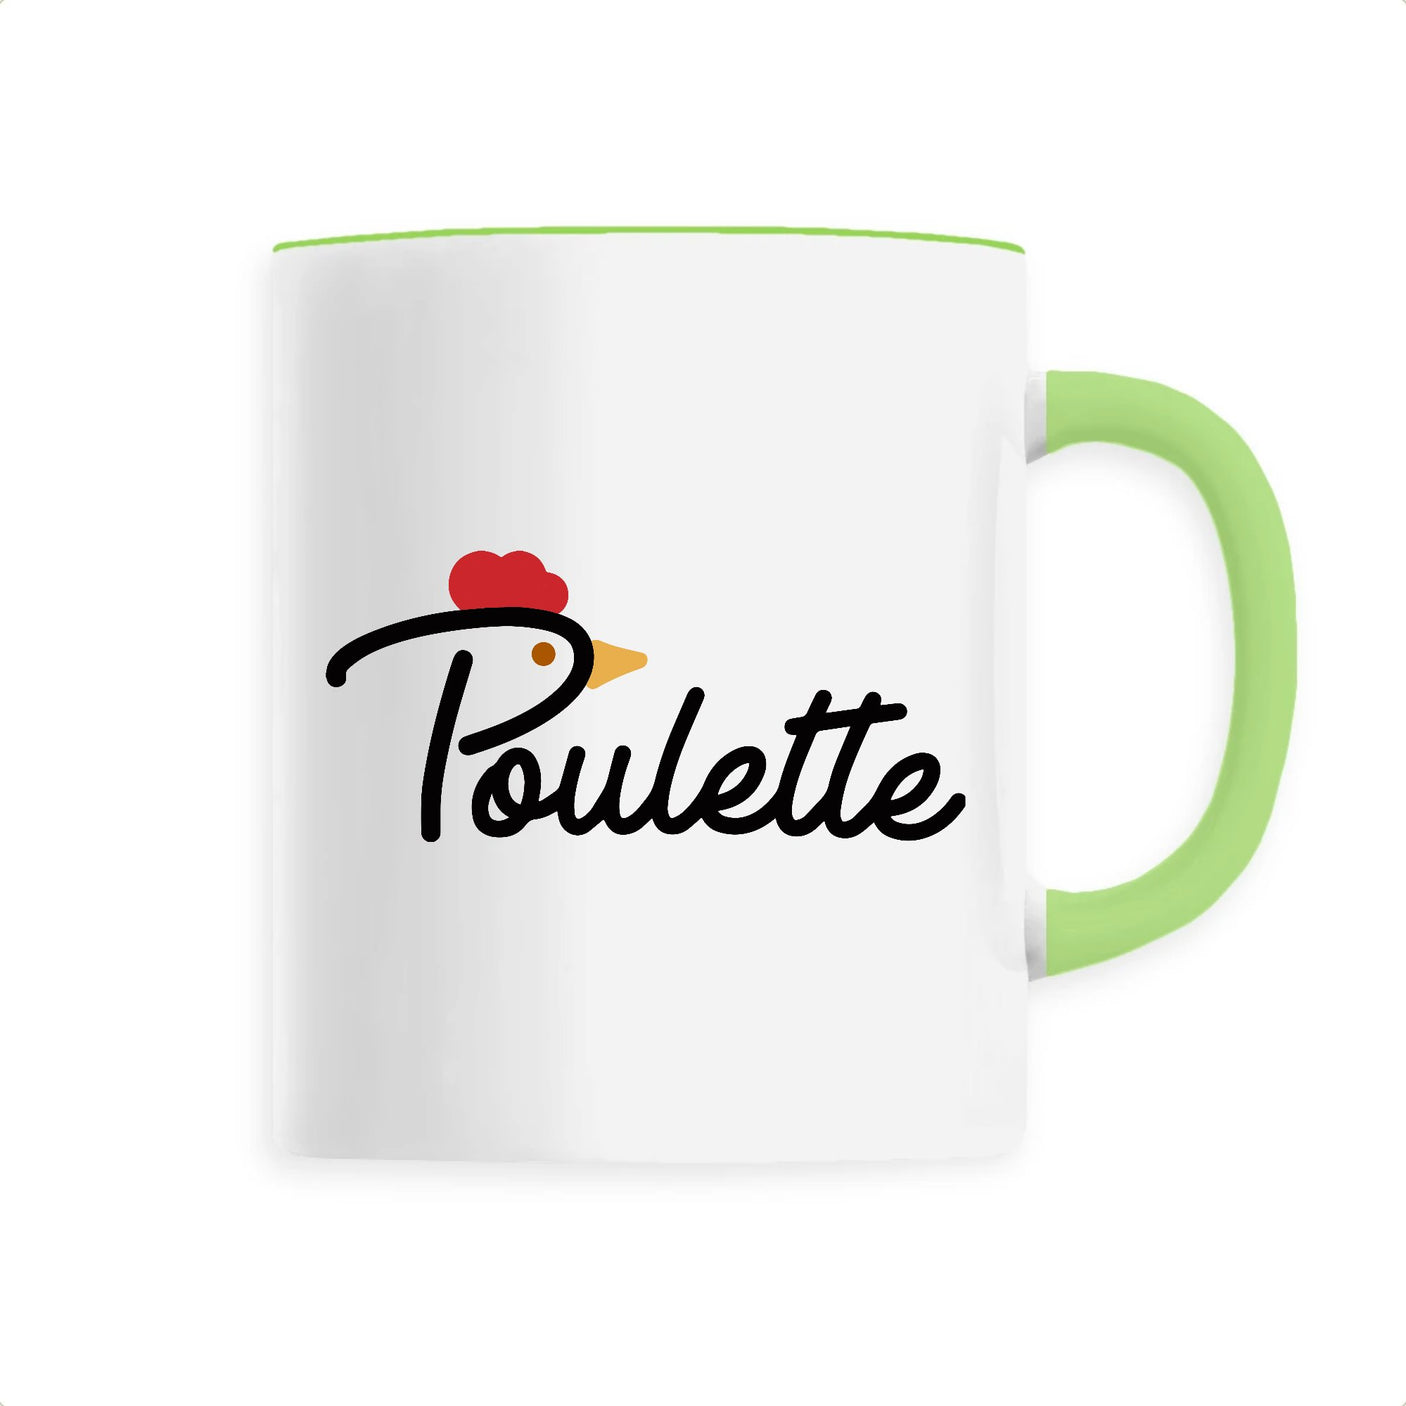 Mug Poulette 